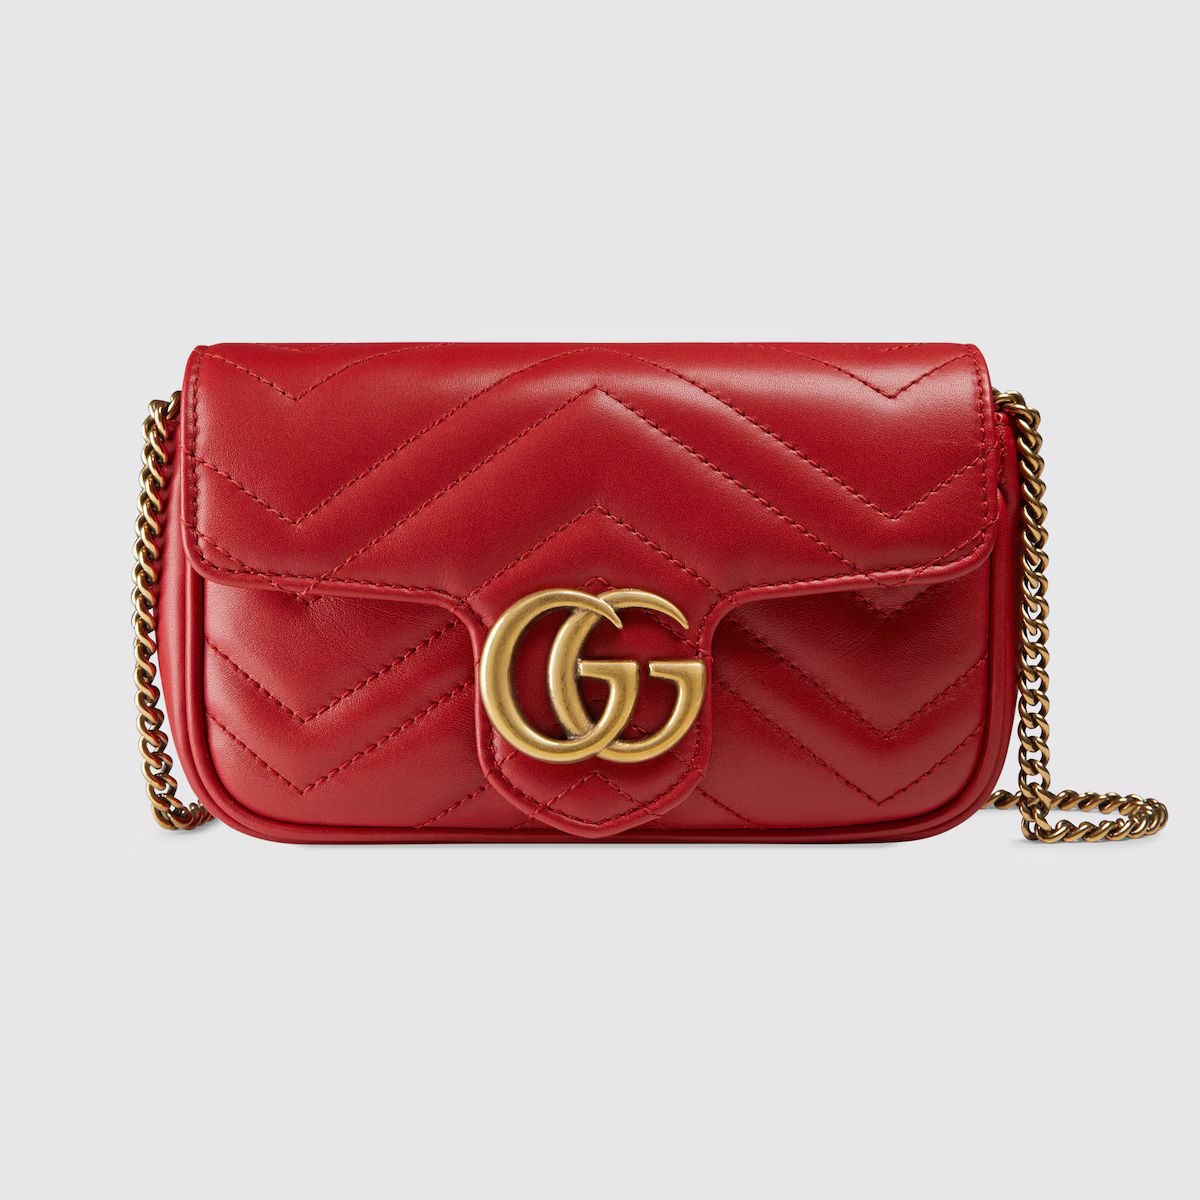 GG Marmont matelassé leather super mini bag



        
            $ 890 | Gucci (US)